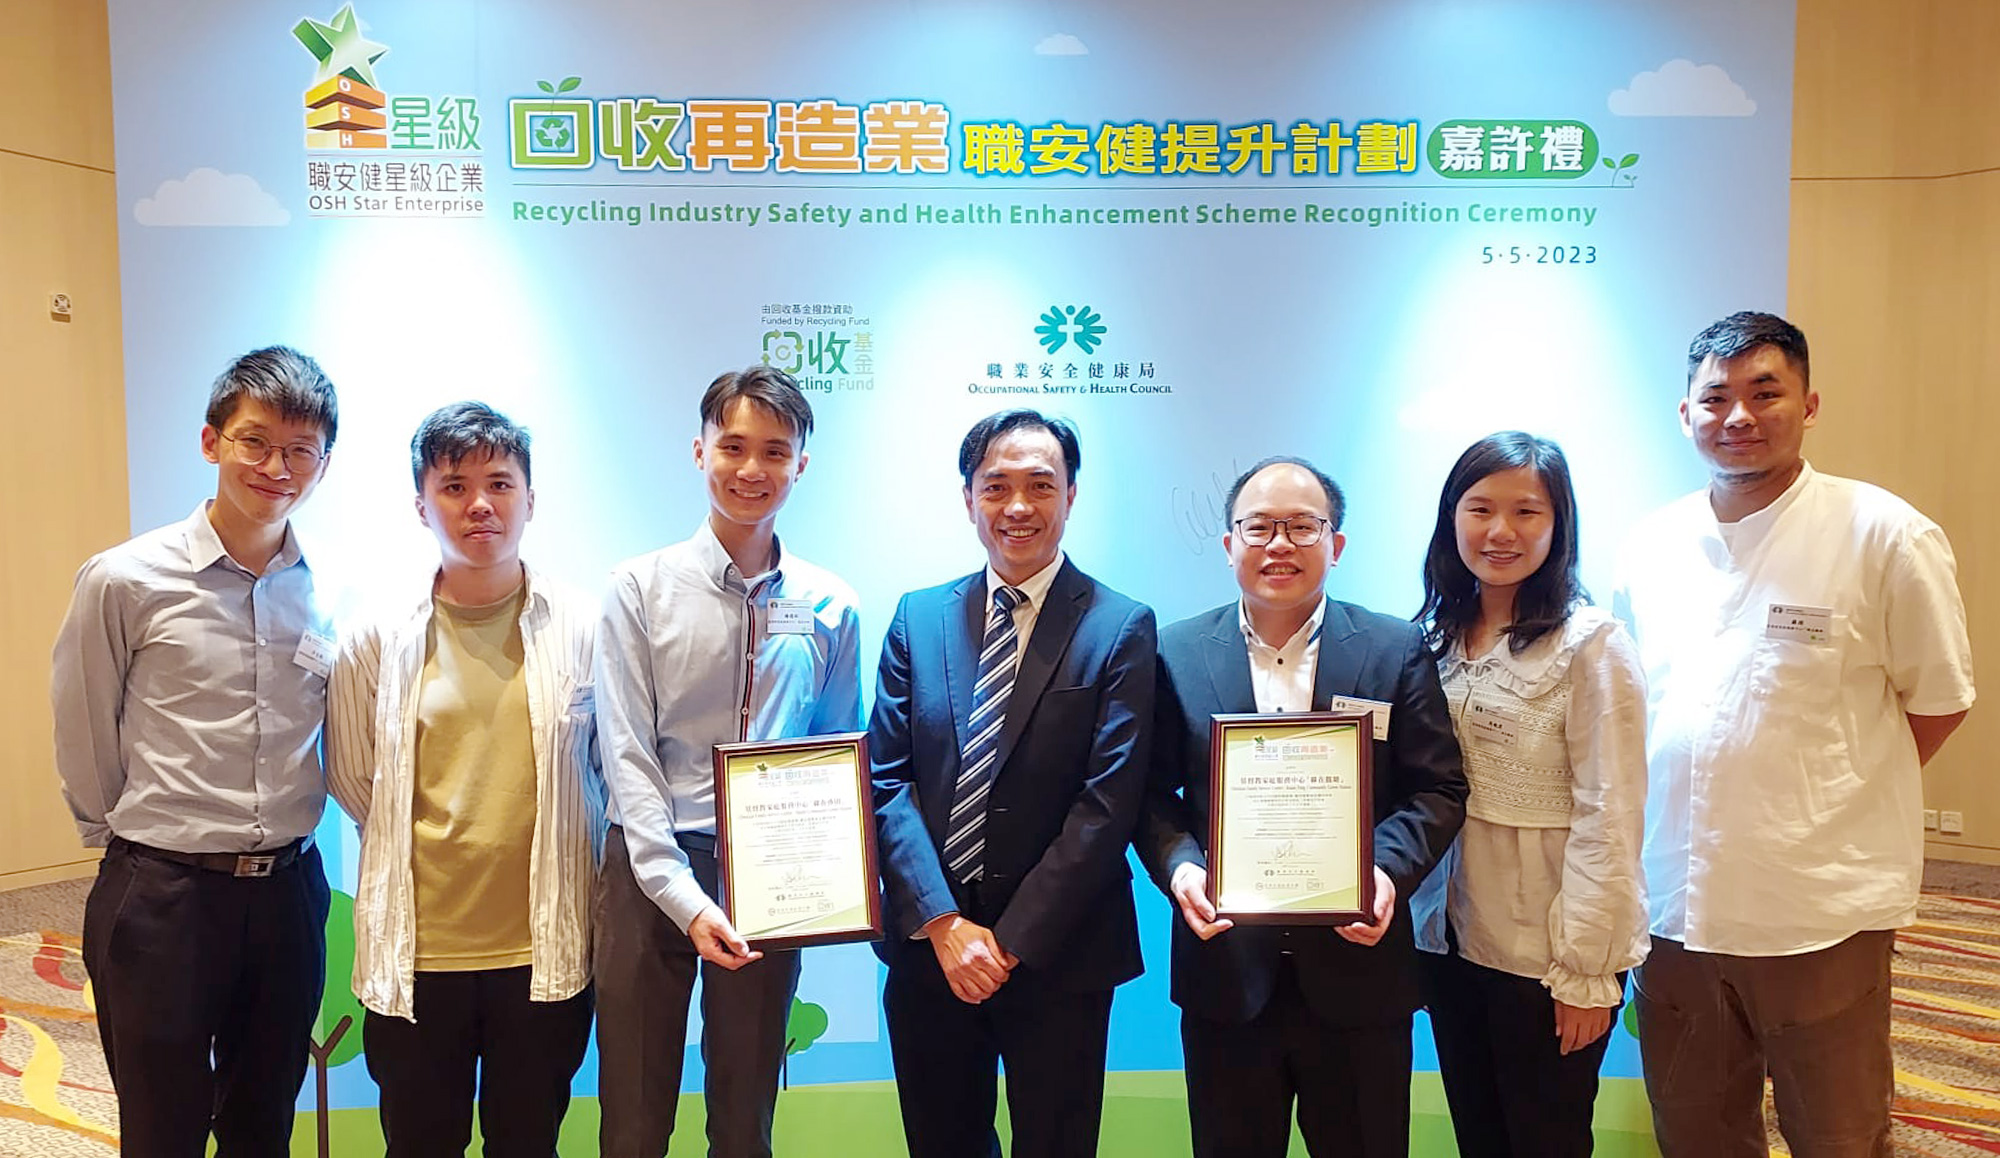 Cover Image - Occupational Safety & Health Council Award - Green @ Sha Tin and Green @ Kwun Tong 